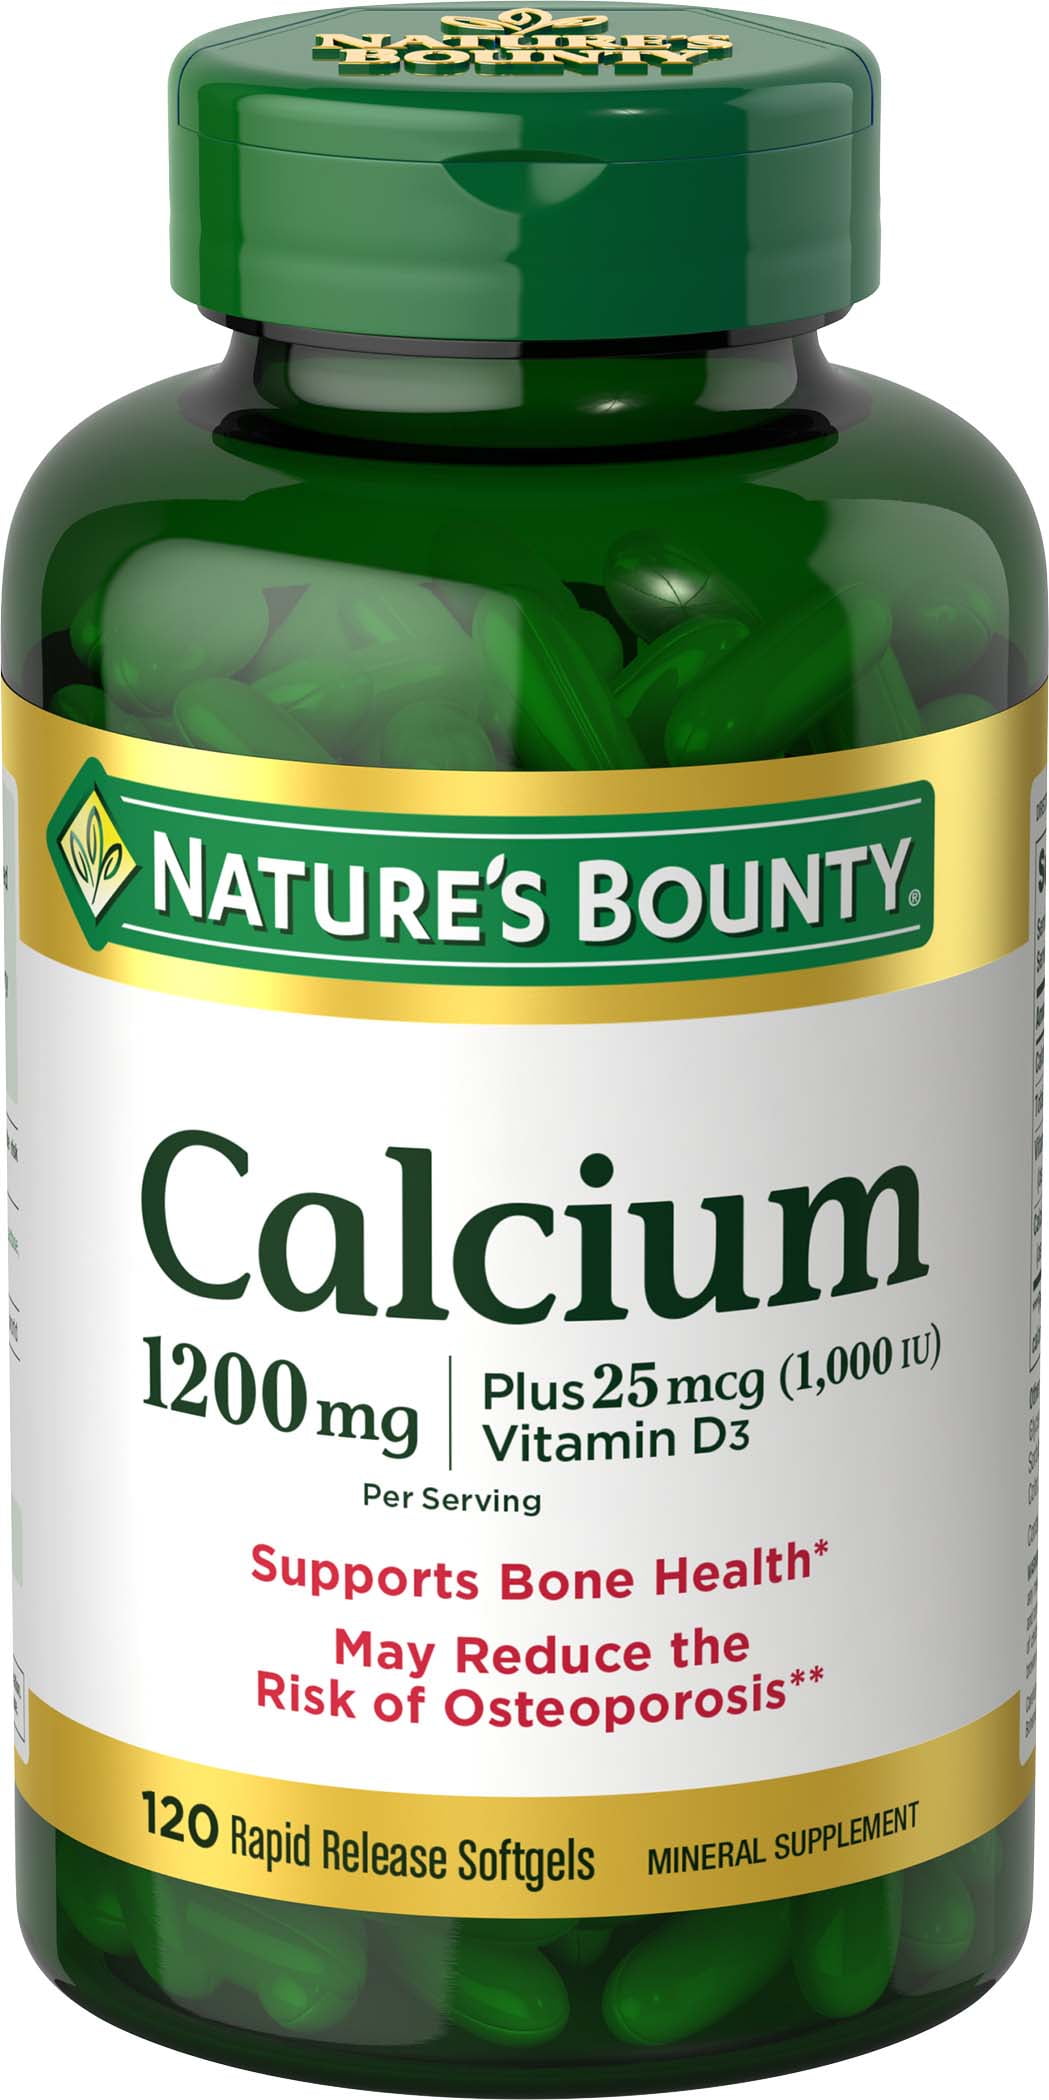 Natures Bounty Absorbable Calcium 1200mg Plus Vitamin D3 25mcg 1000 Iu 120 Softgels Mineral Supplement To Support Bone Health Walmartcom